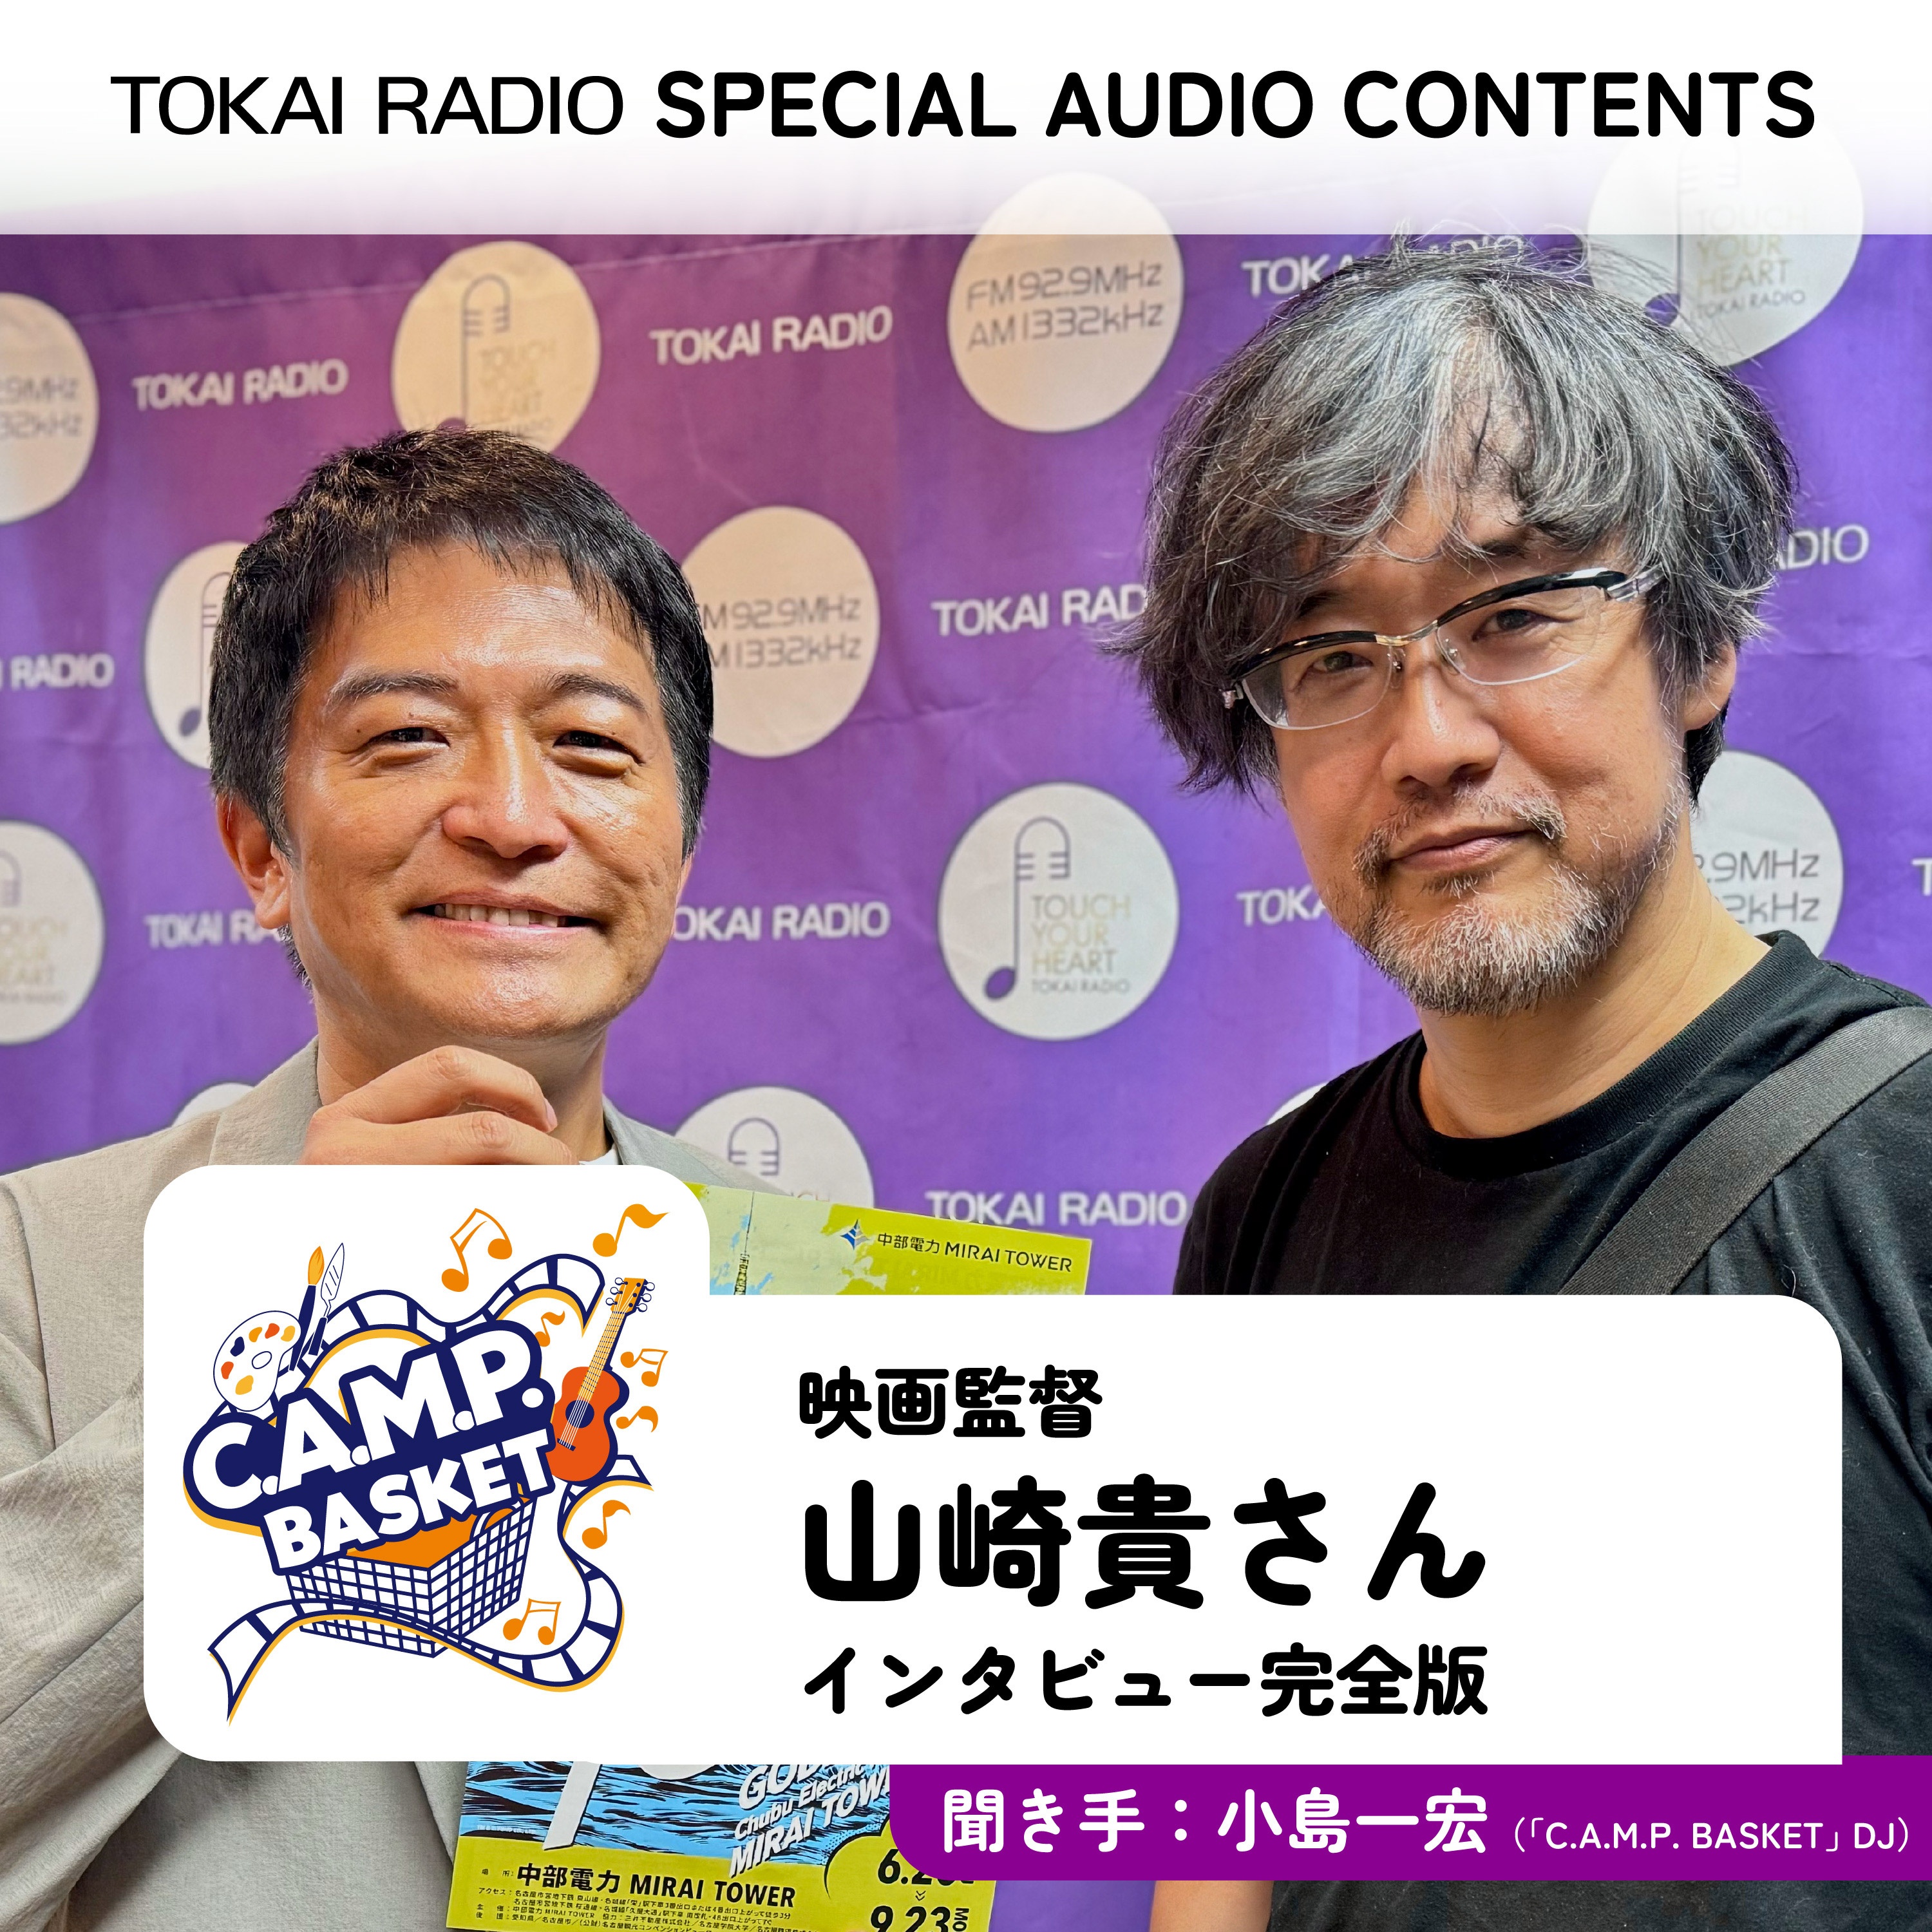 TOKAI RADIO　SPECIAL AUDIO CONTENTS　映画監督 山崎貴さんインタビュー完全版のPODCASTです。聞き手はDJ小島一宏